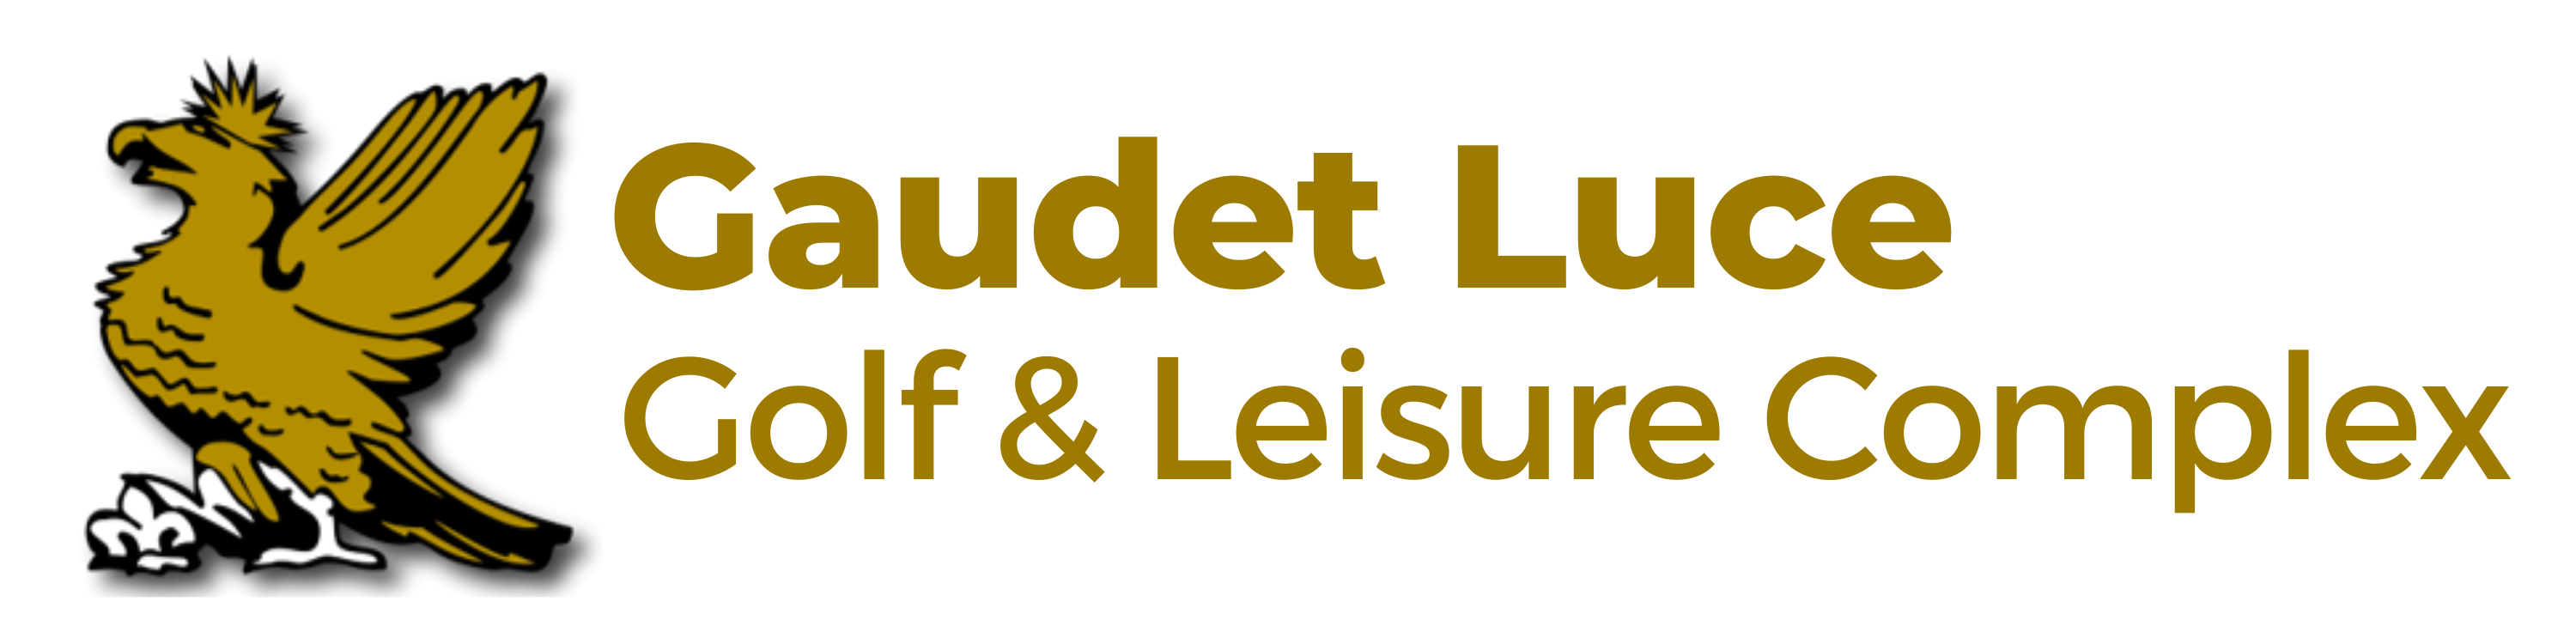 Gaudet Luce Logo Transparent Background